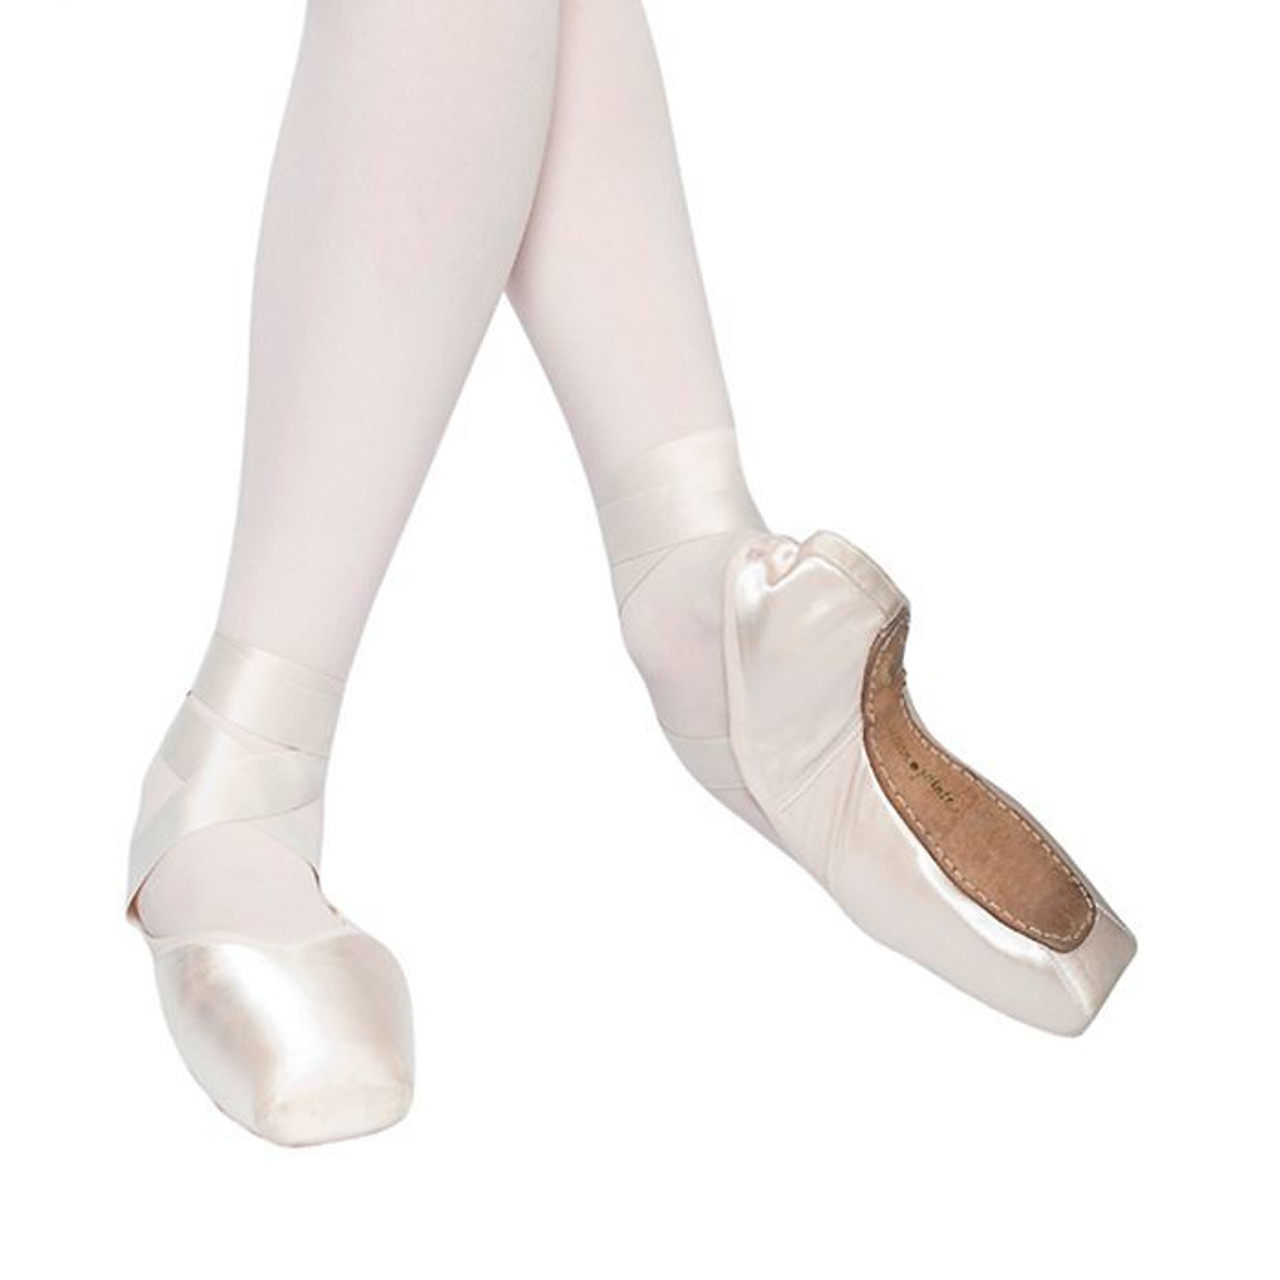 russian ballet shoes